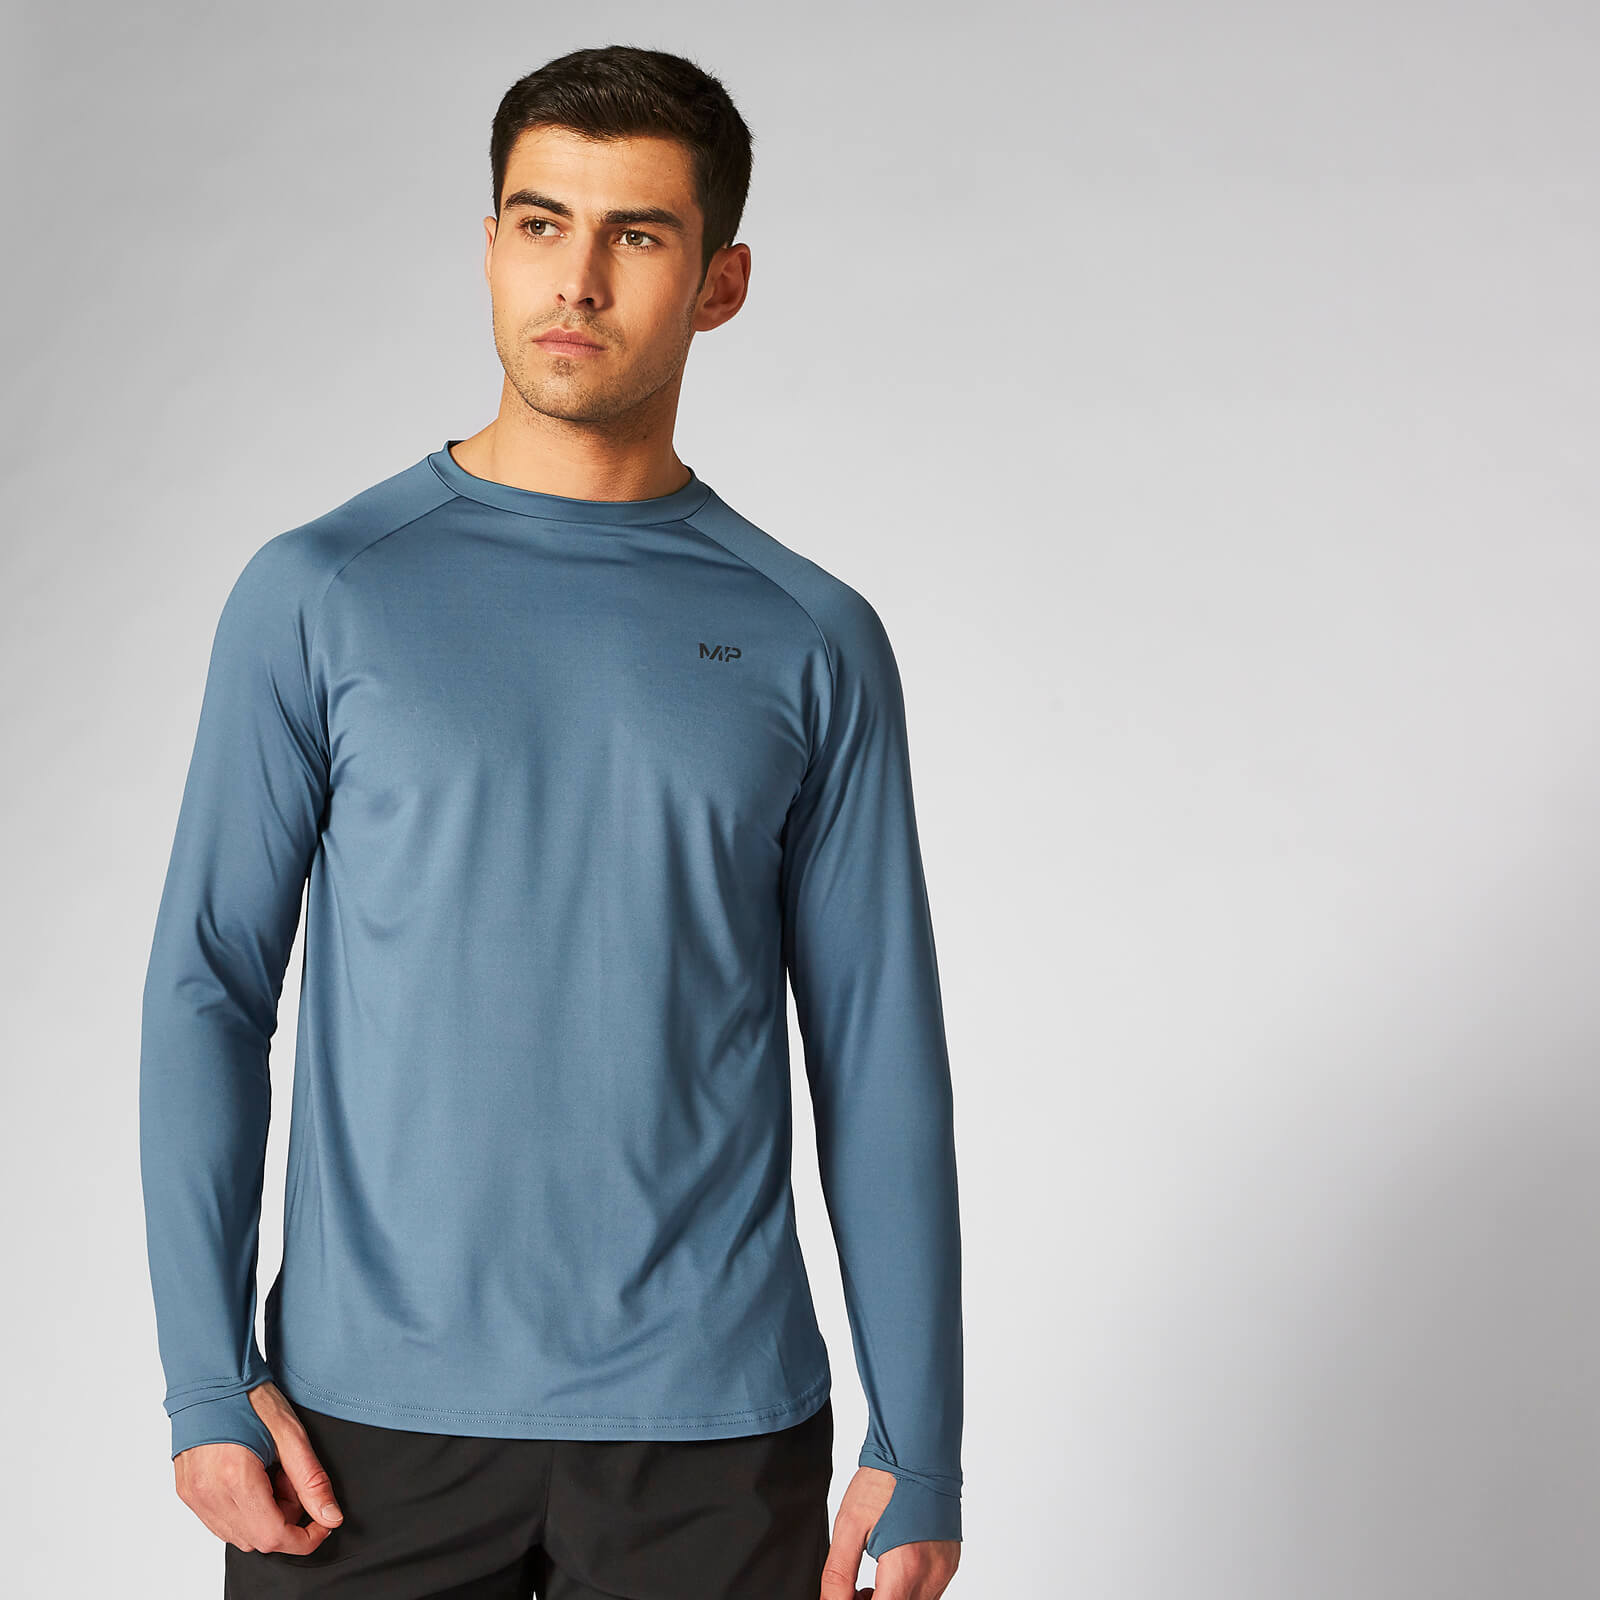 Myprotein Dry Tech Infinity Long Sleeve T-Shirt - Cadet Blue